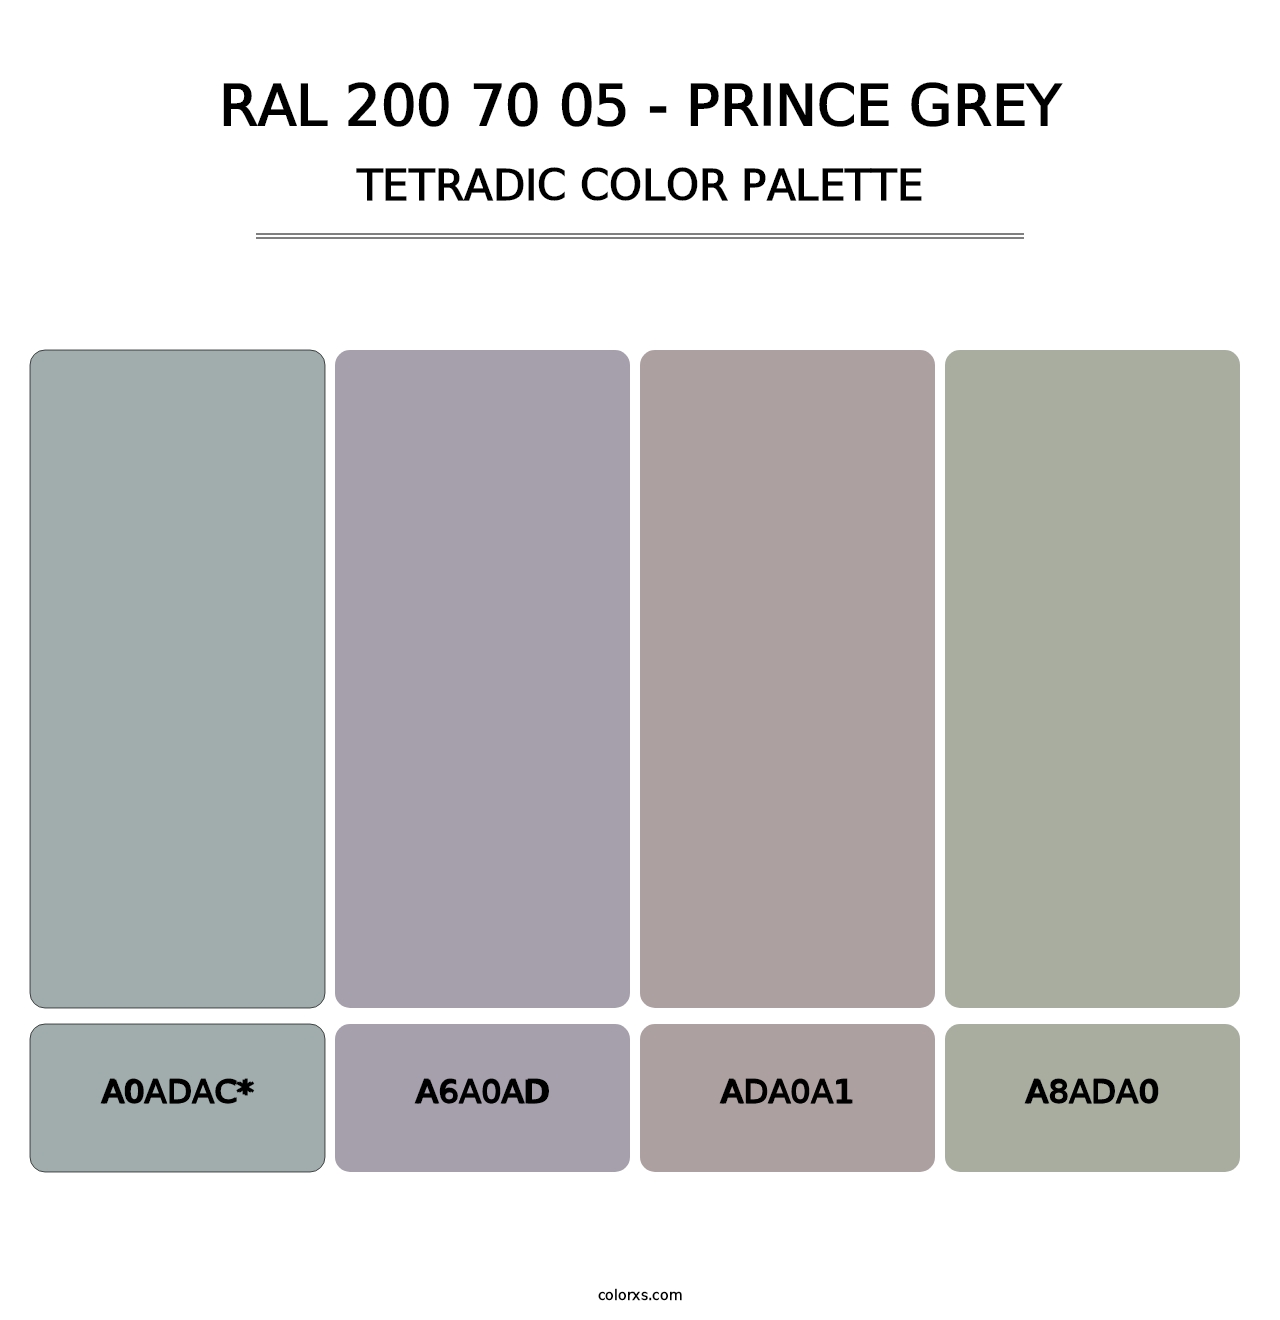 RAL 200 70 05 - Prince Grey - Tetradic Color Palette